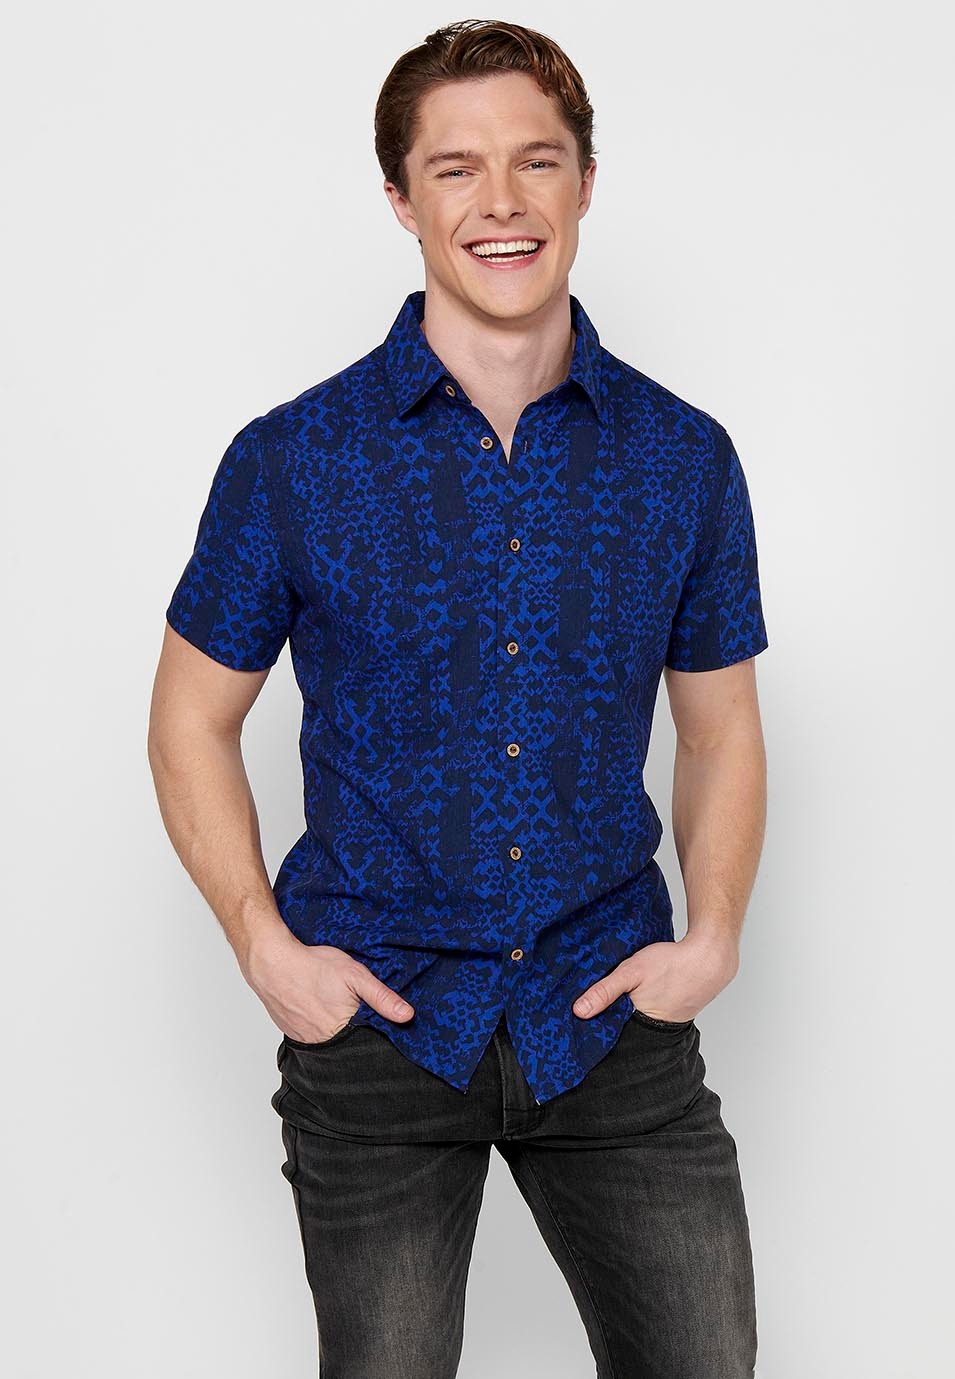 Men's Blue Color Button Front Closure Short Sleeve Printed Shirt